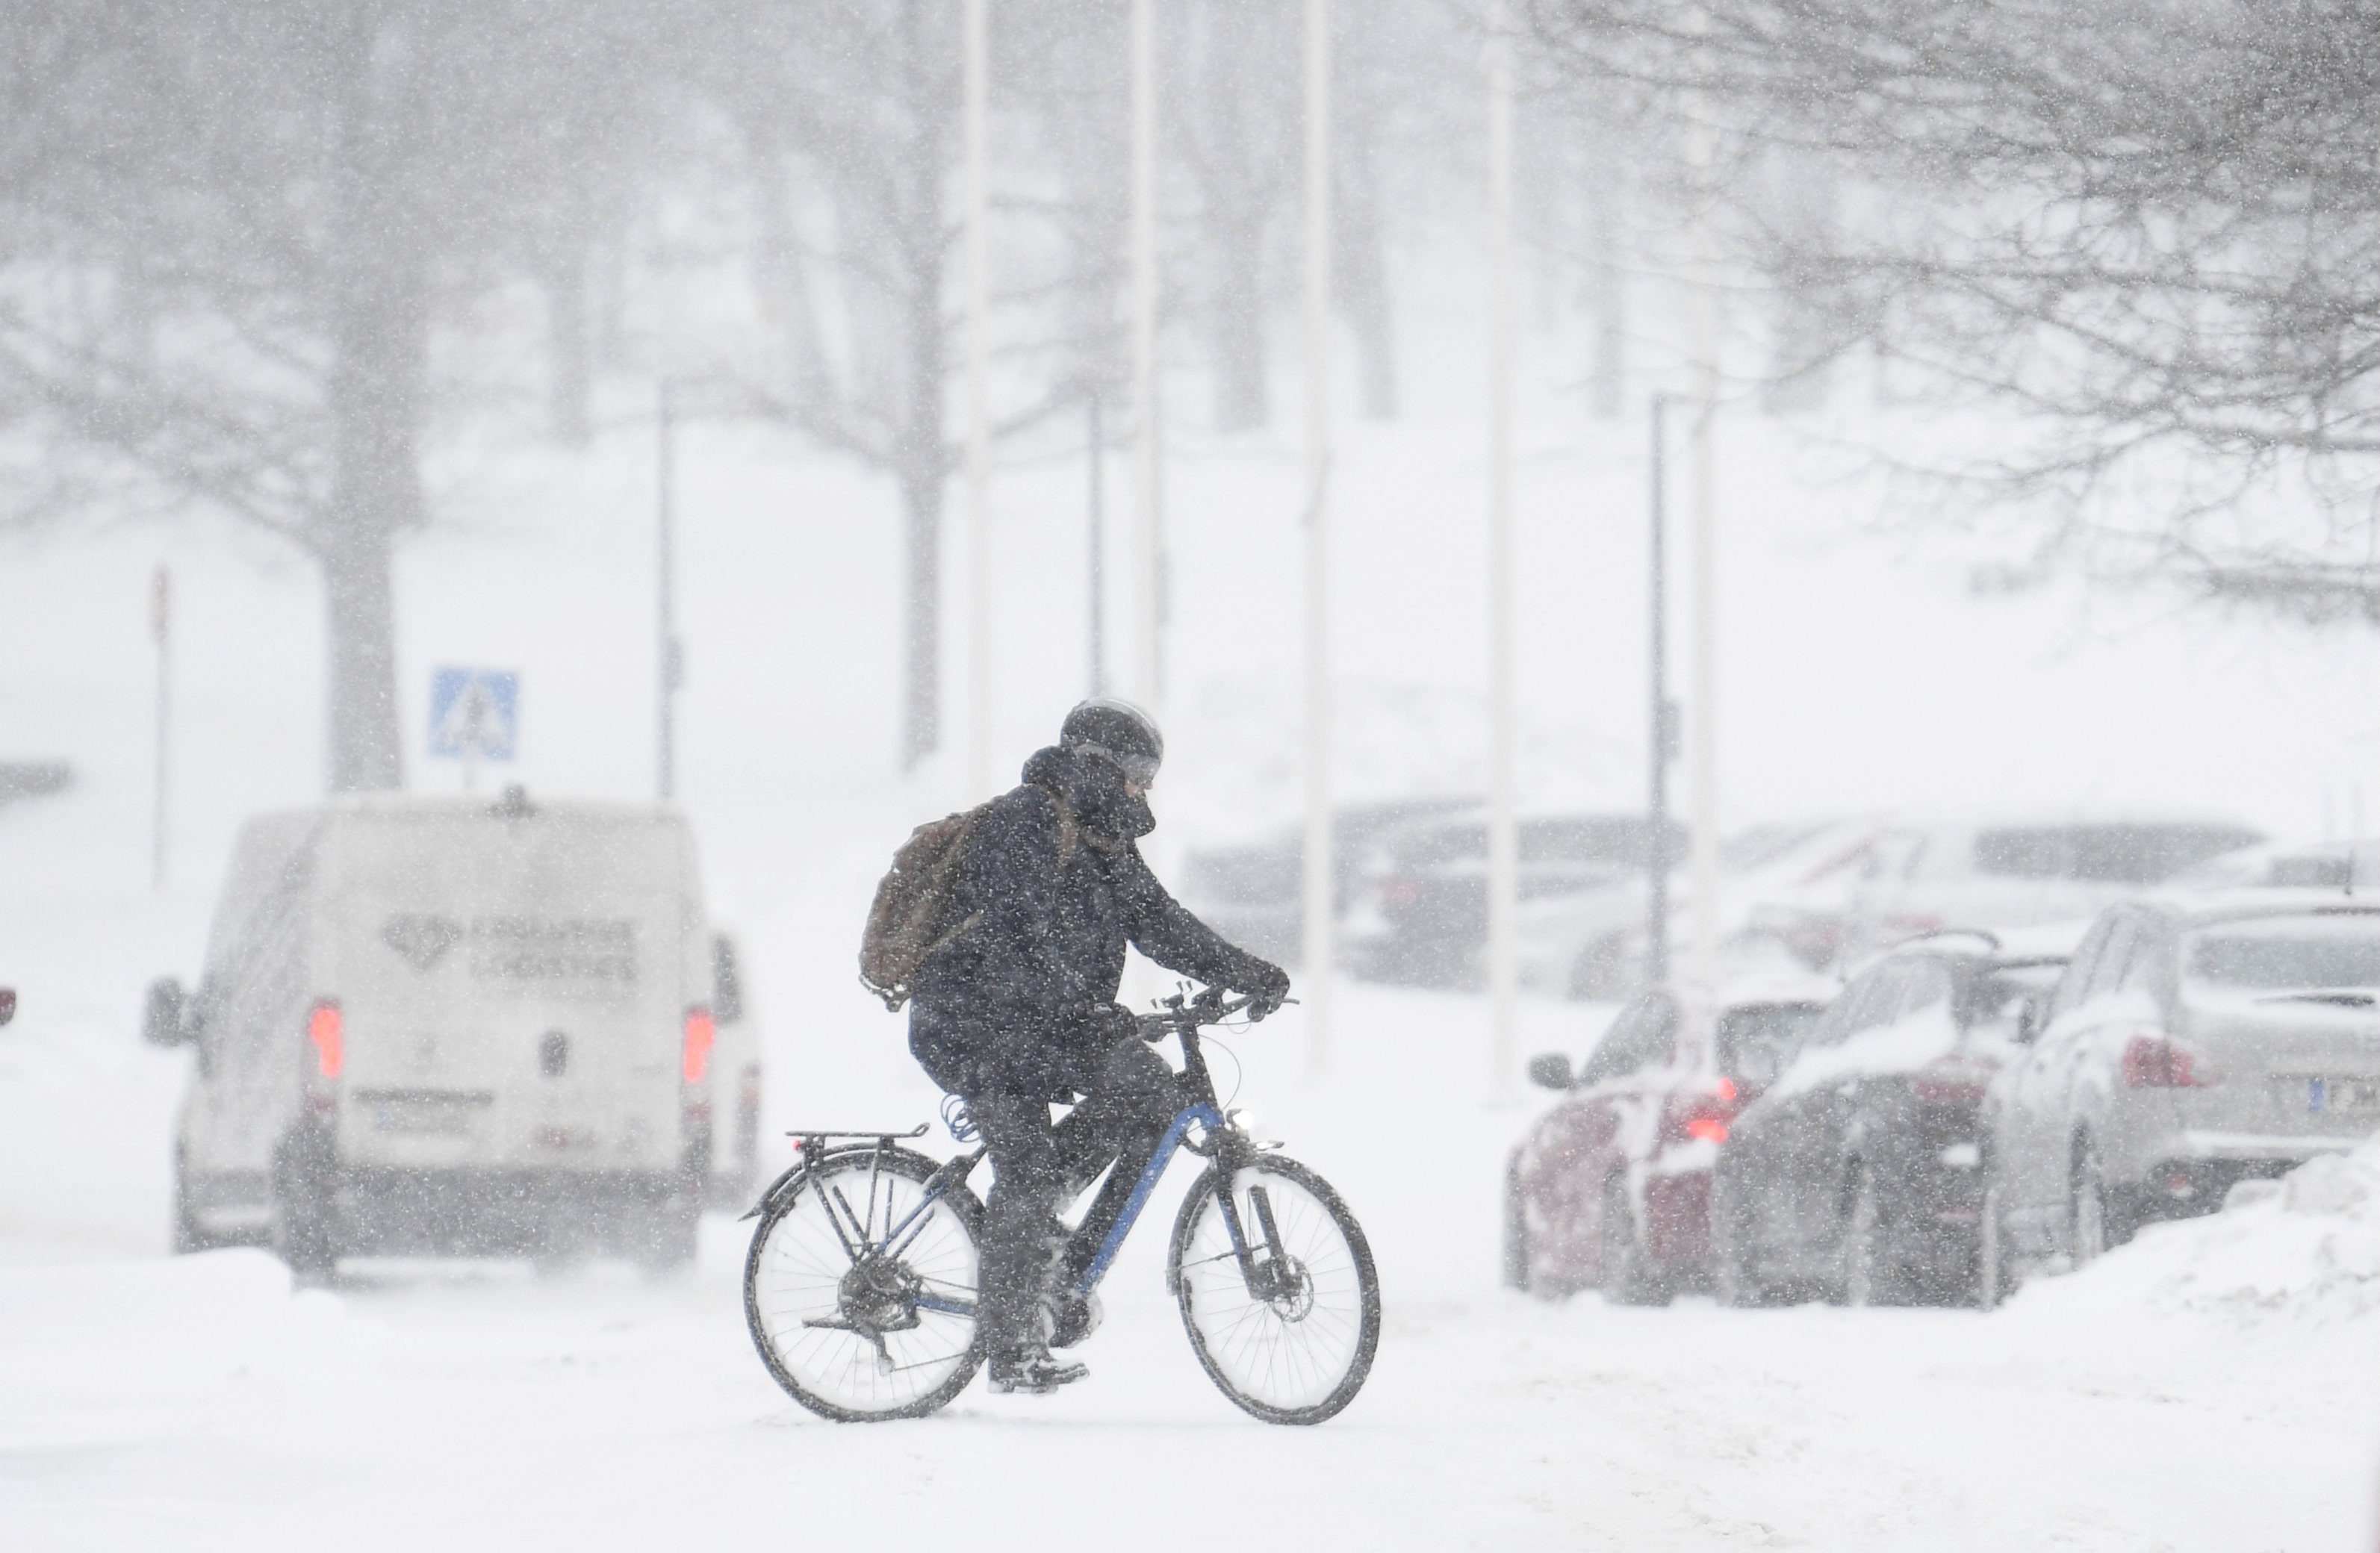 A little snow doesn’t stop cyclists in&nbsp;Helsinki.